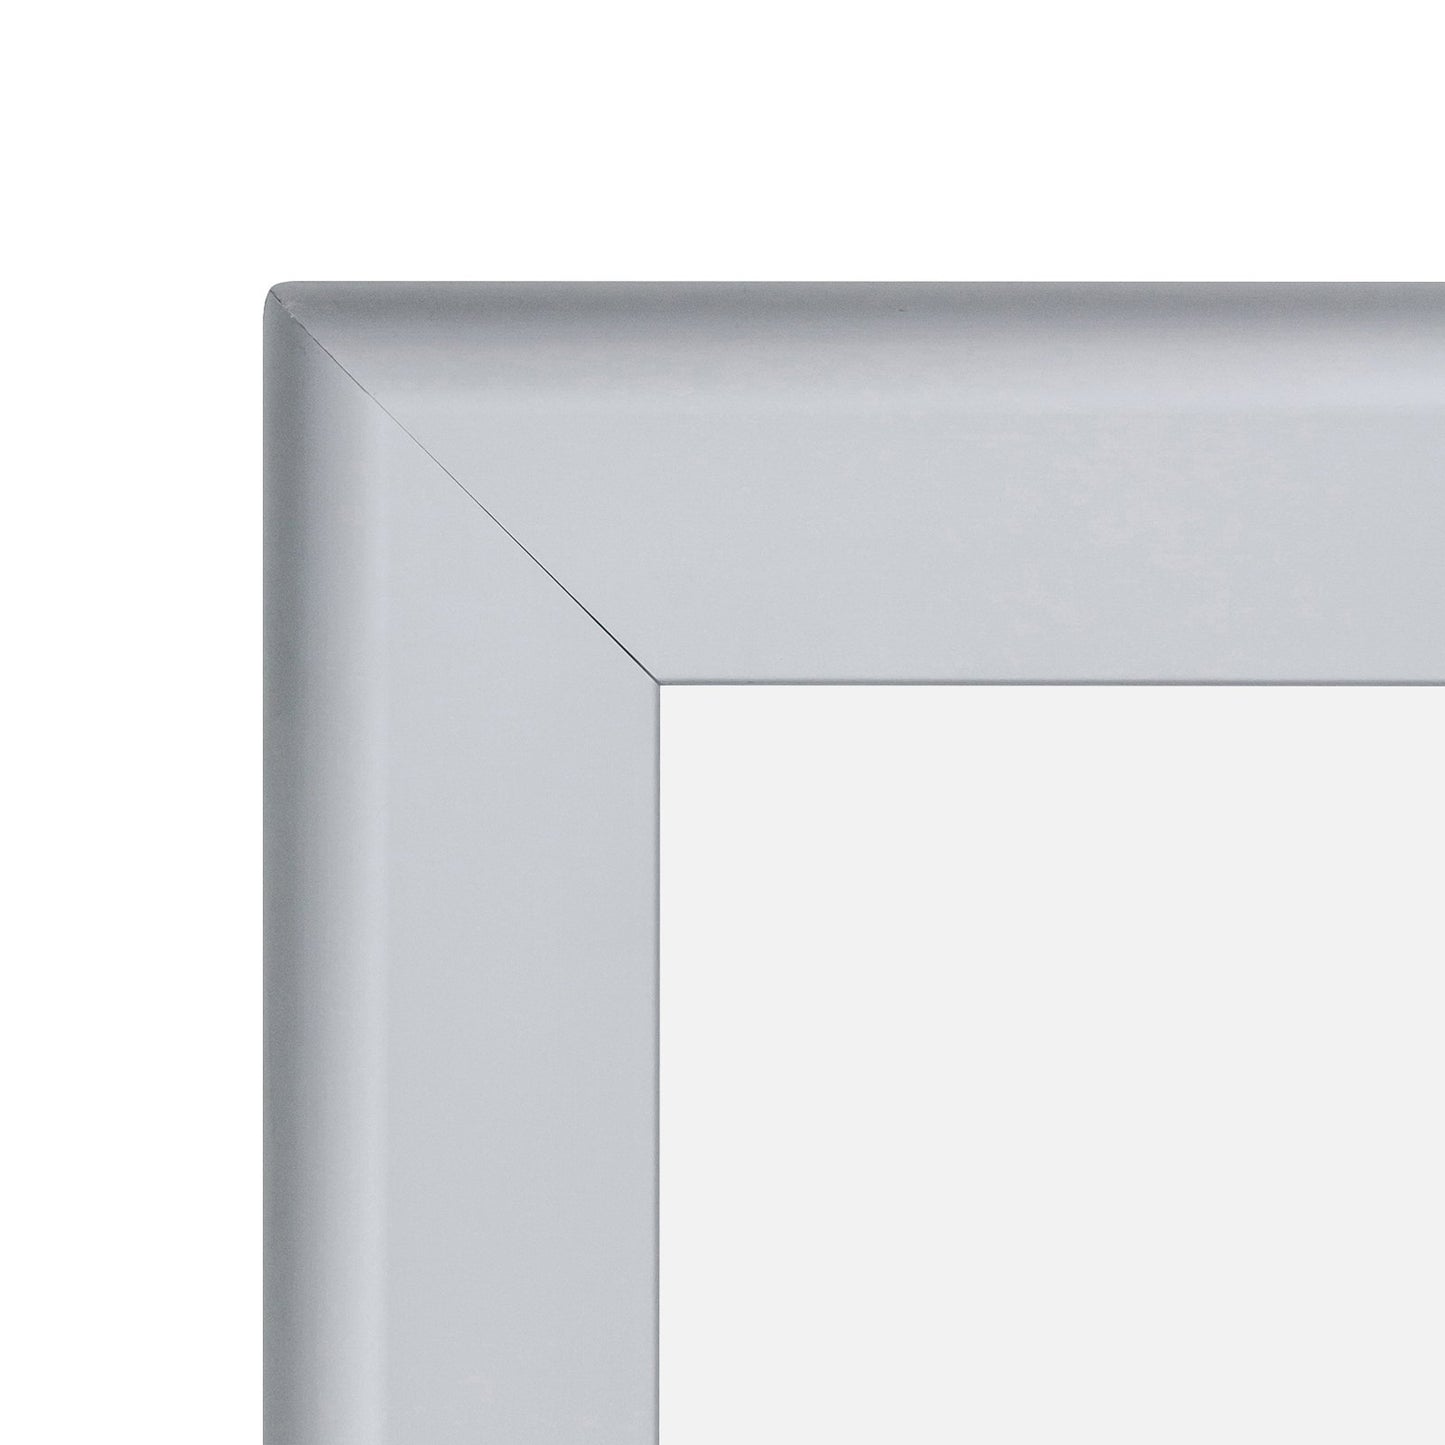 36x48 Silver SnapeZo® Snap Frame - 1.7" Profile